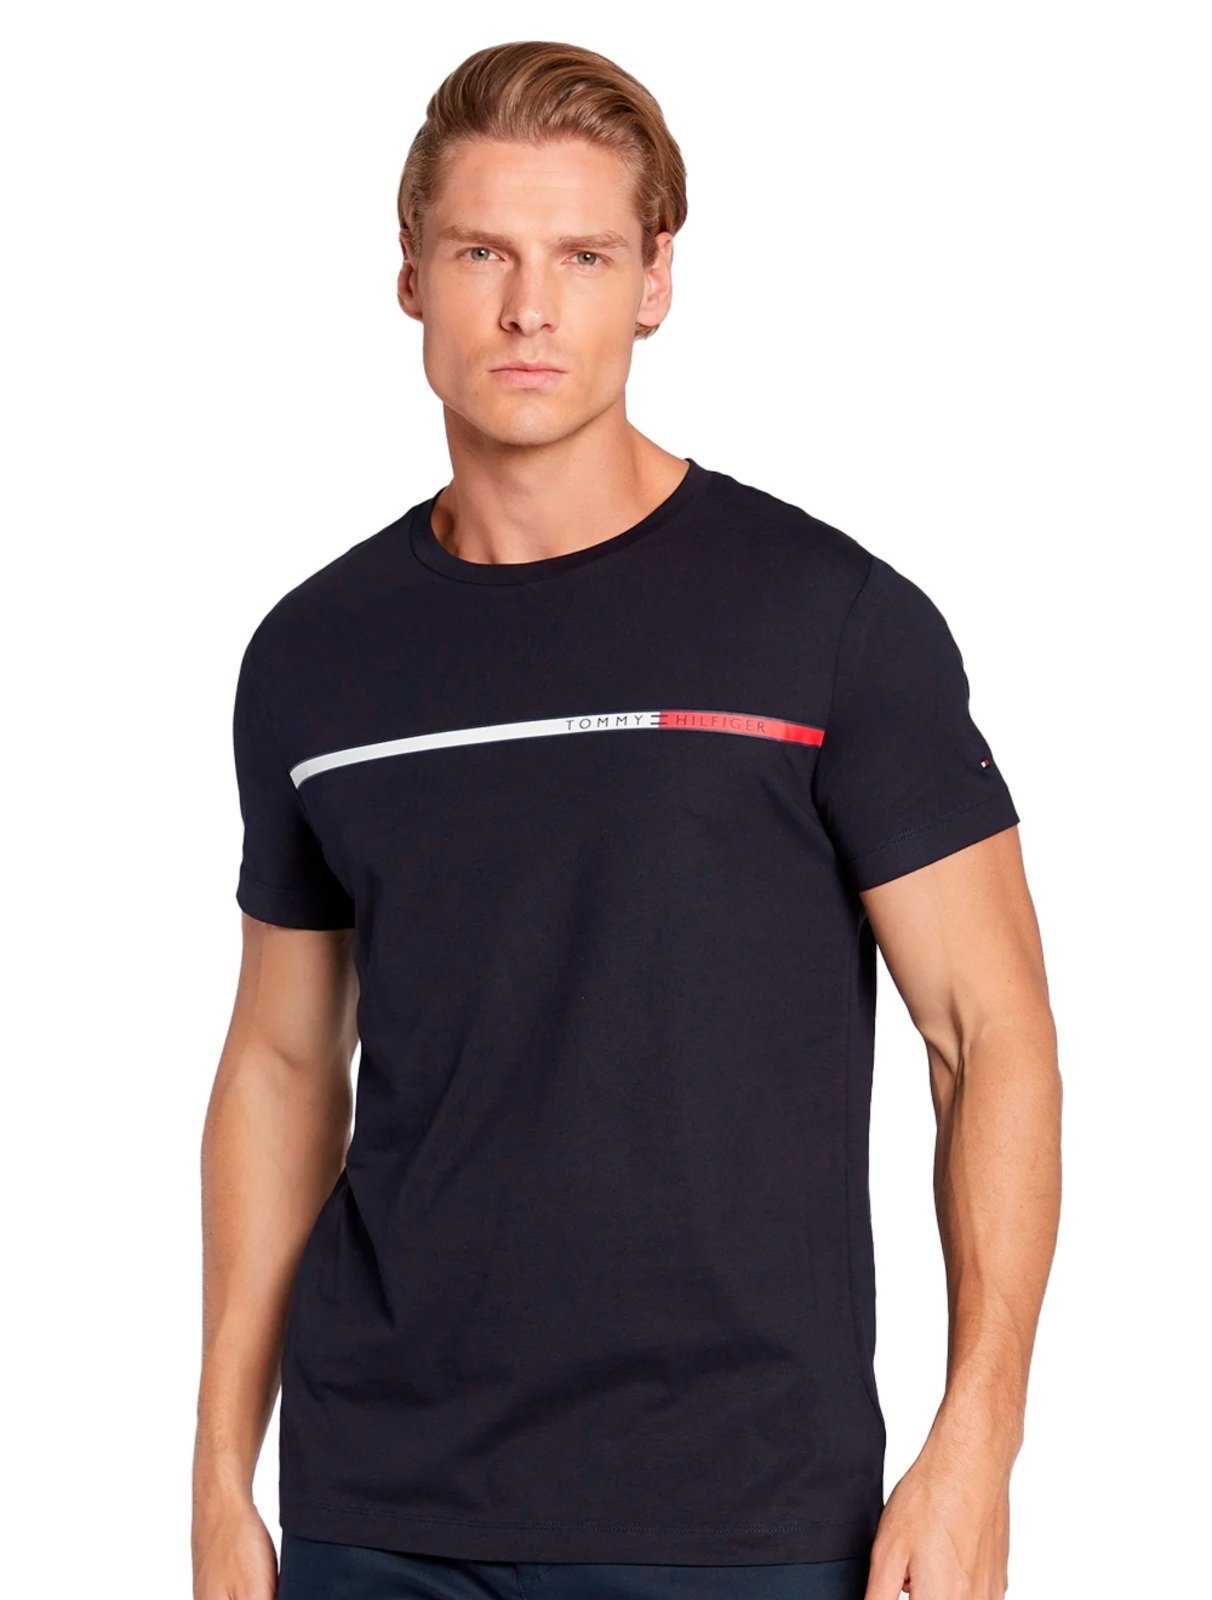 Camiseta Tommy Hilfiger Masculina Global Stripe - Original